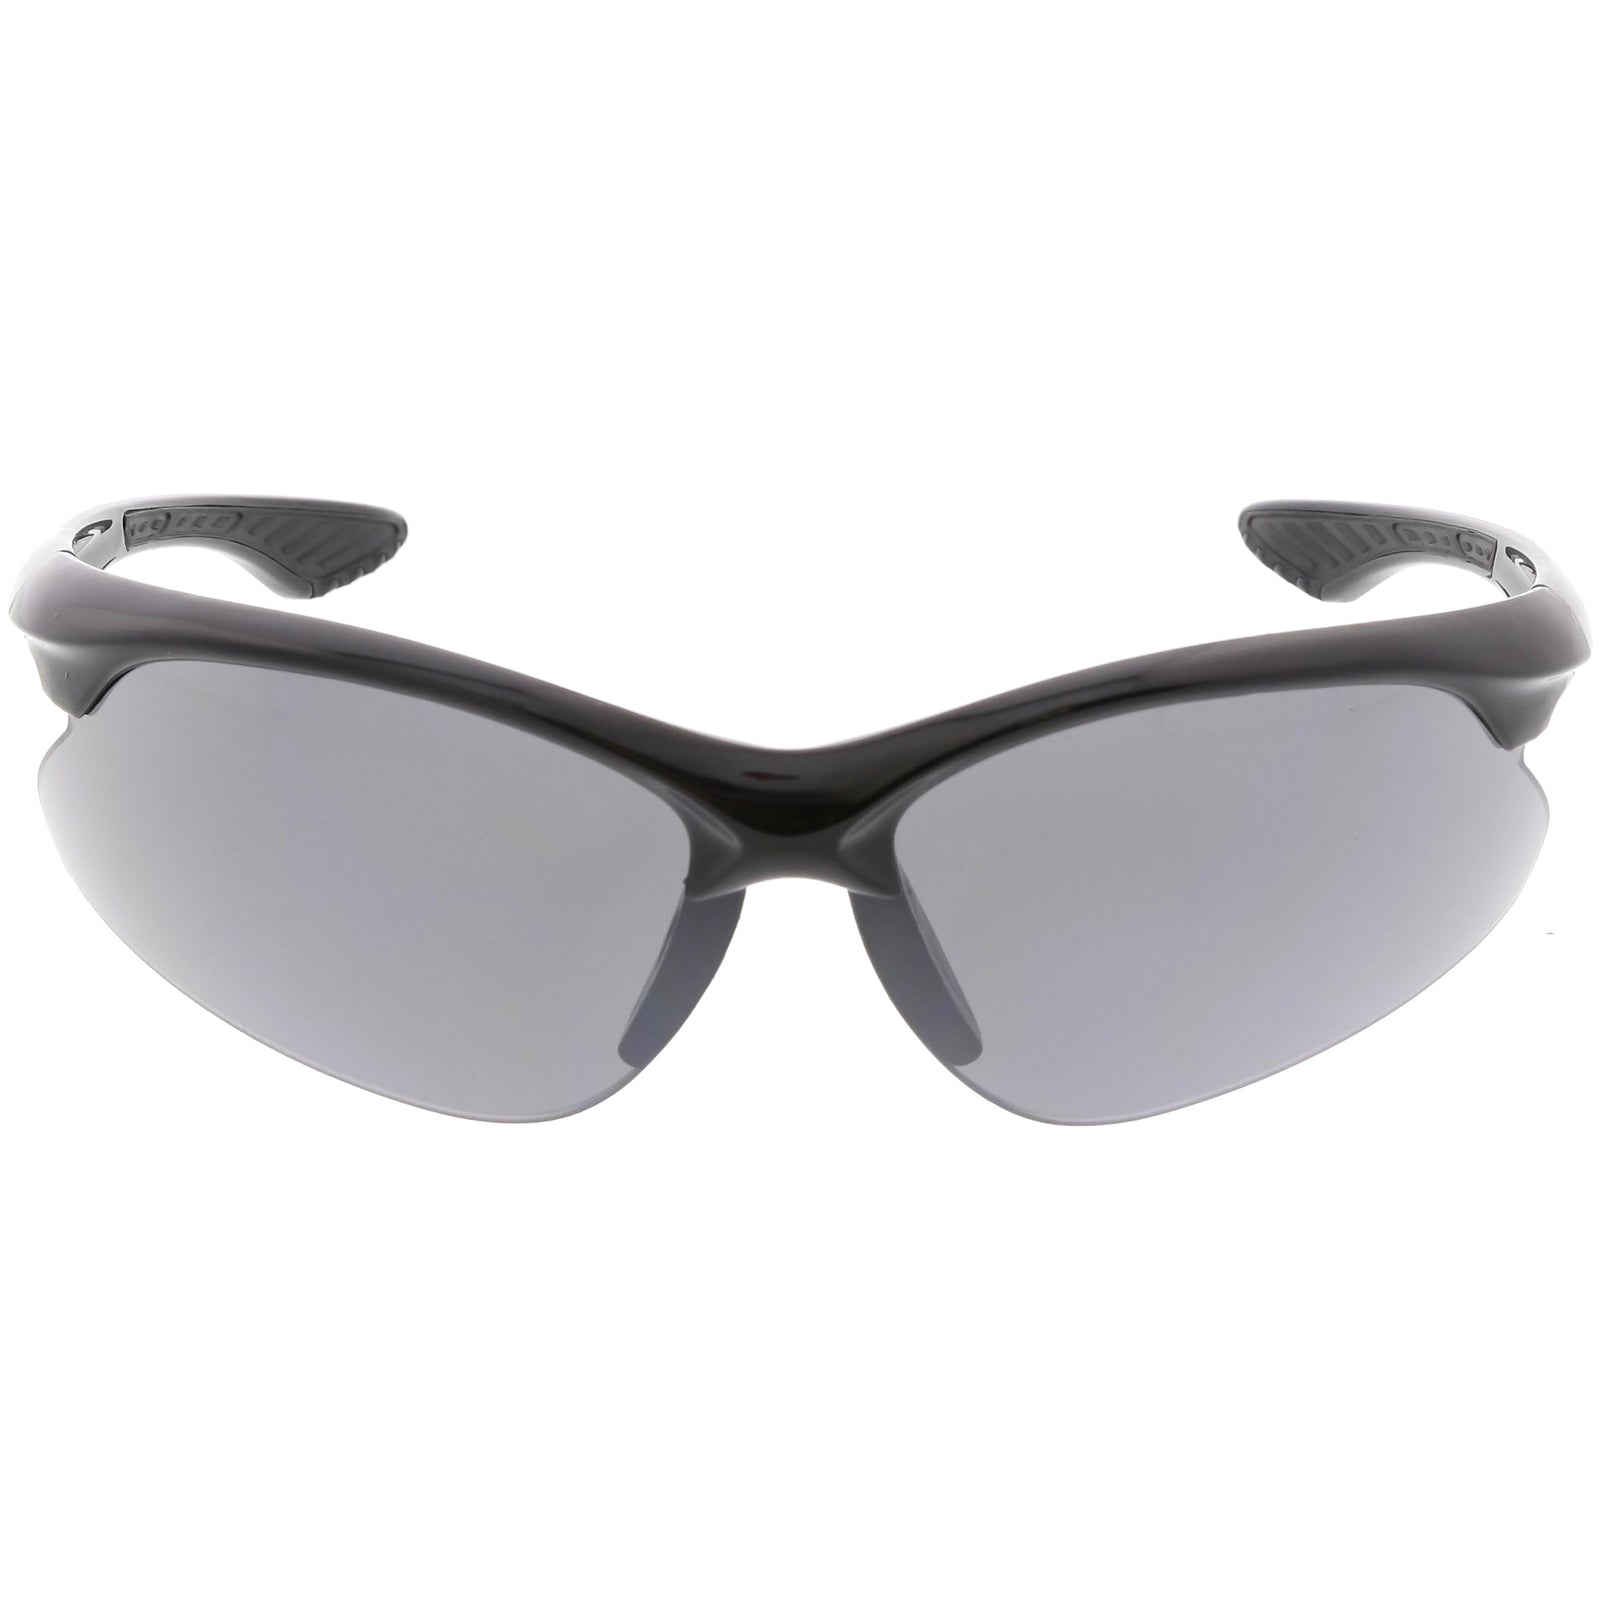 Wraparound Sunglasses for Men